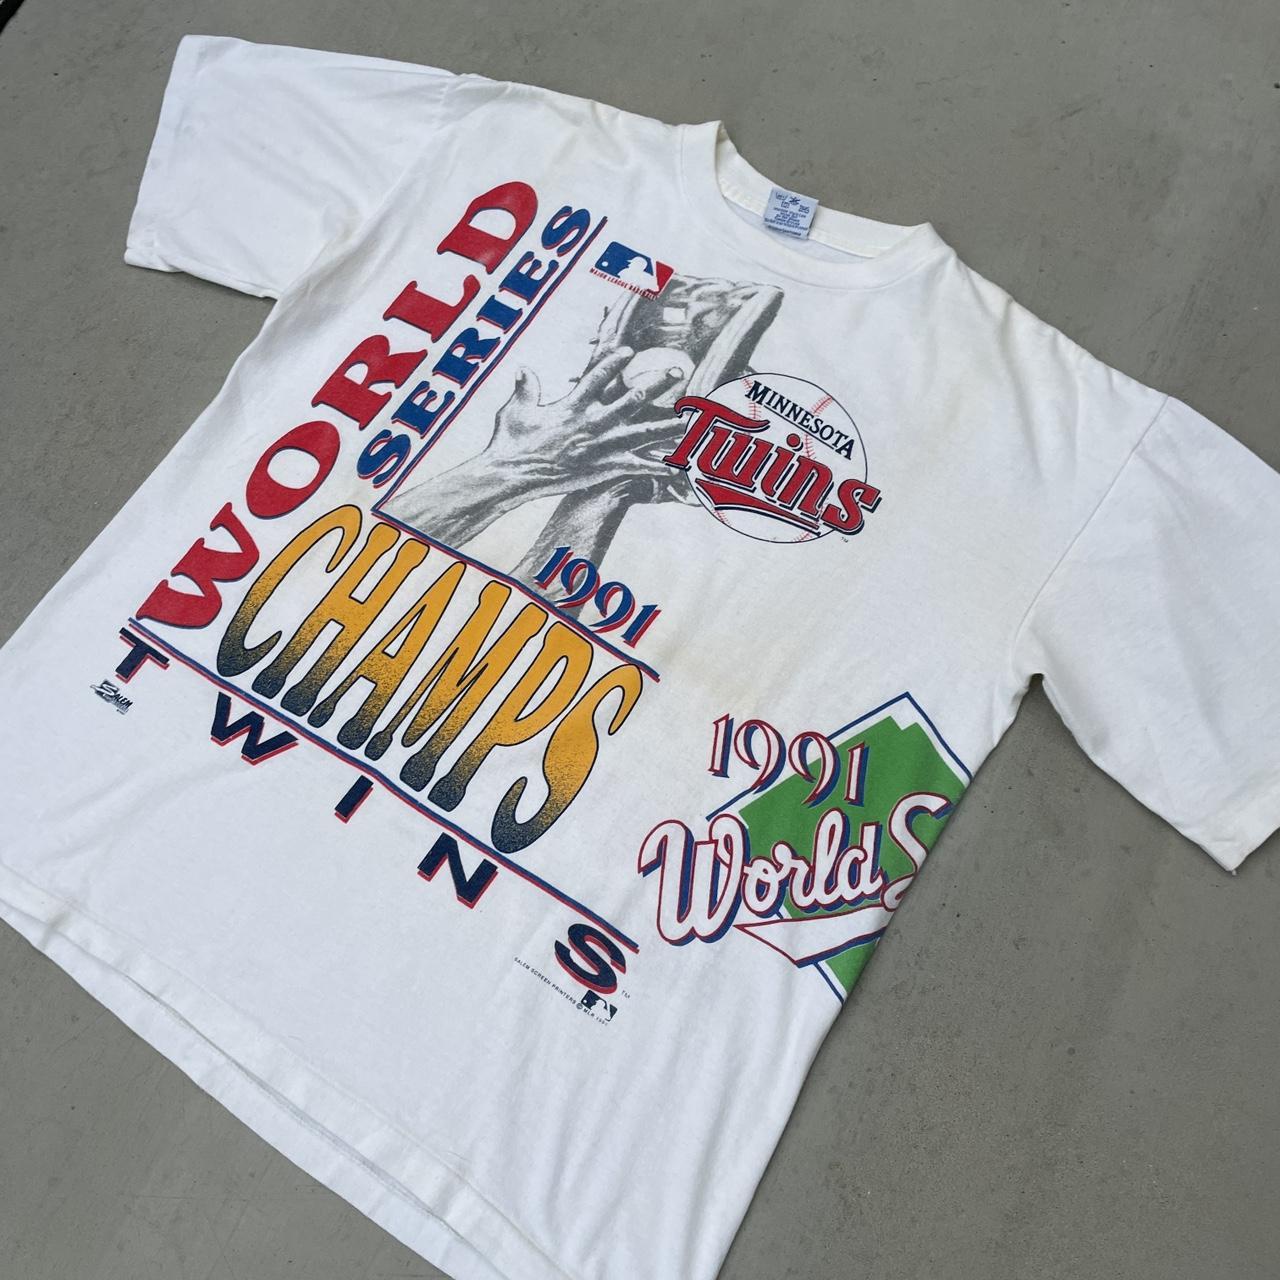 90s Minnesota Twins 1991 World Series Champions t-shirt Large